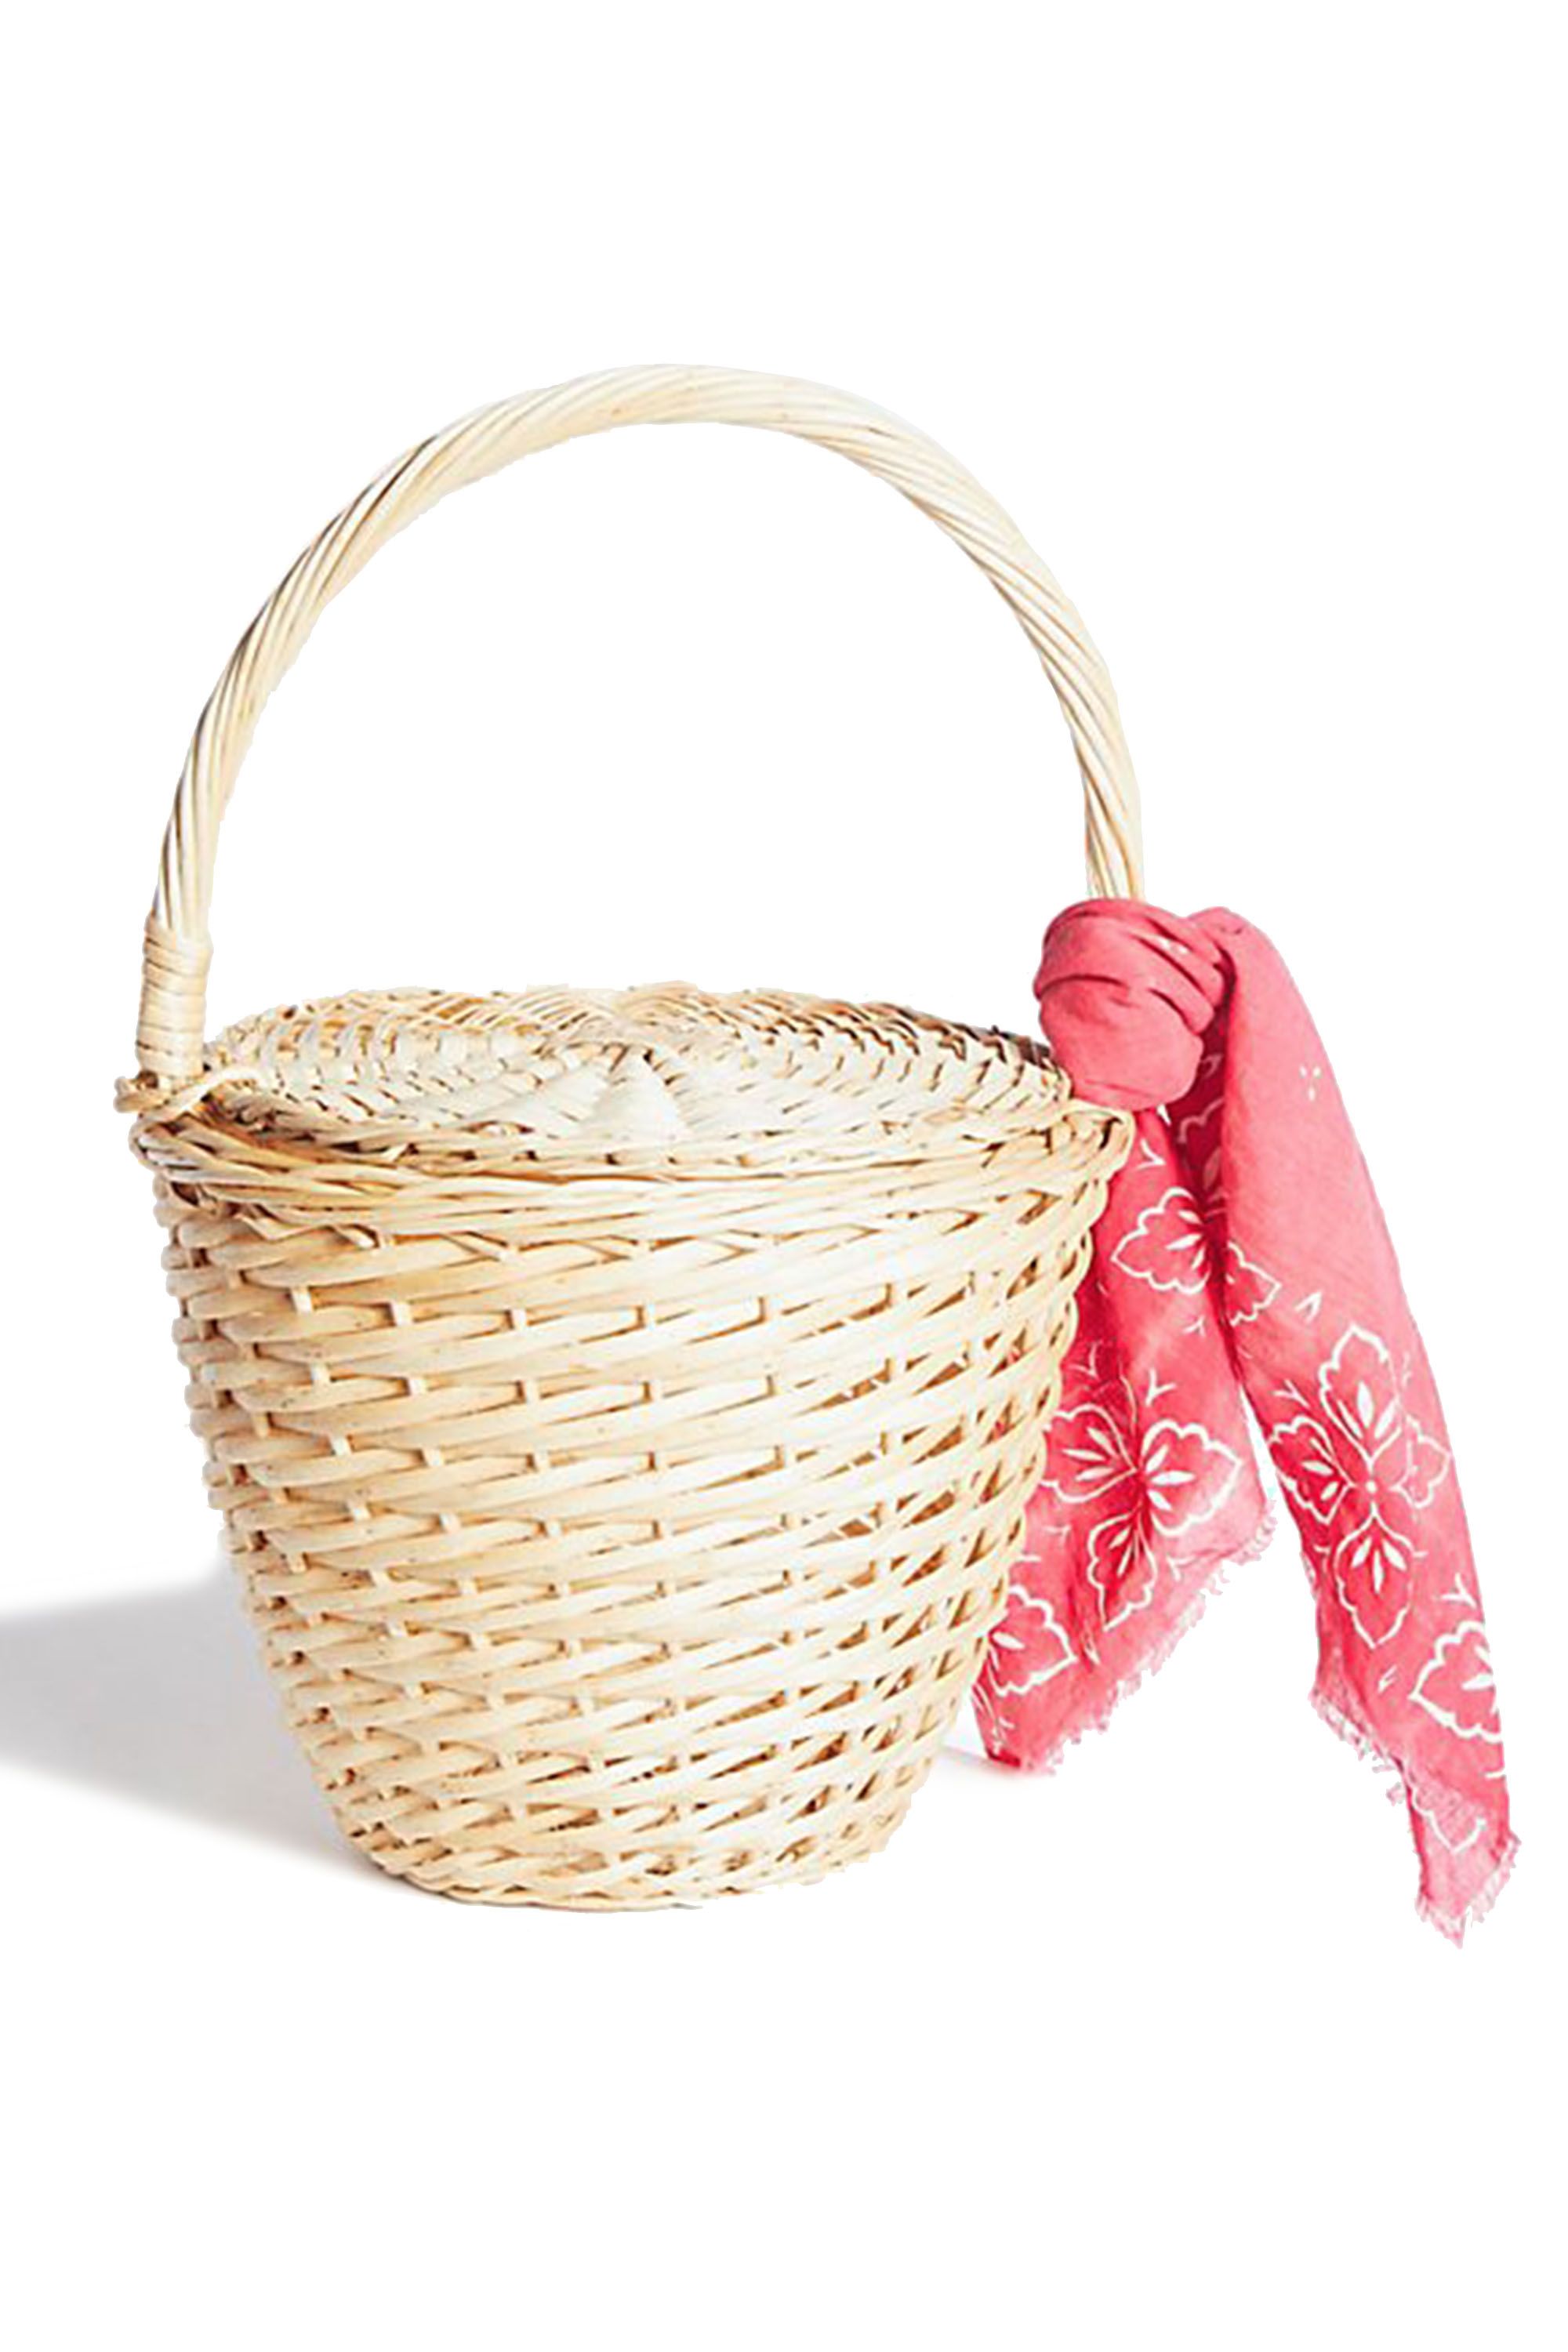 Wicker, Basket, Flower girl basket, Picnic basket, Storage basket, Footwear, Home accessories, Gift basket, 